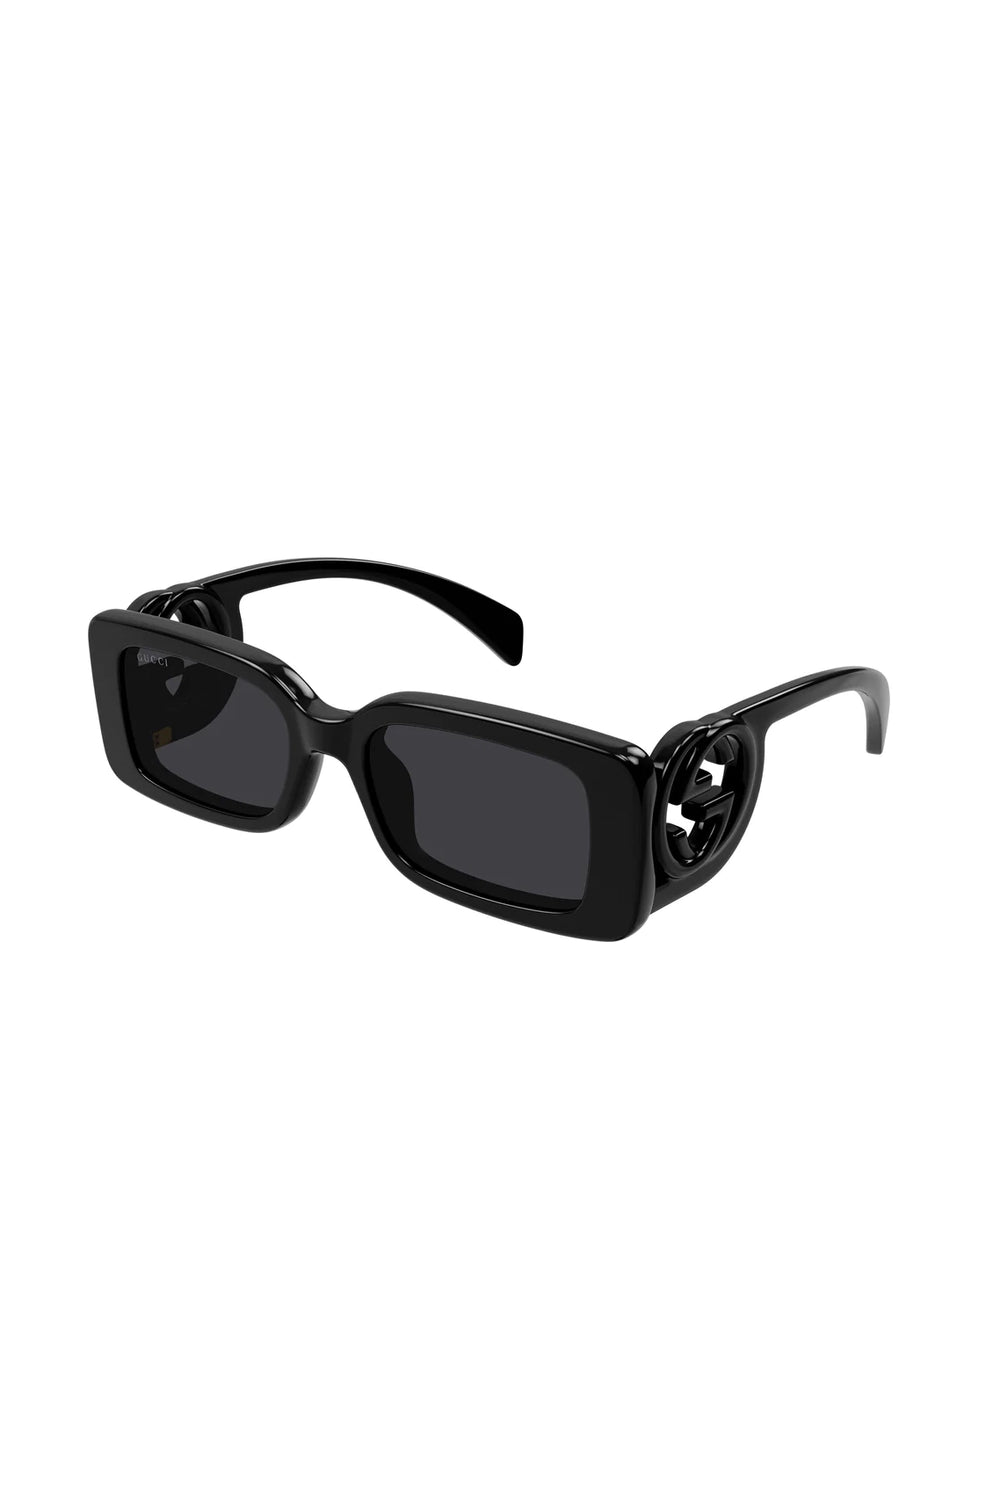 Gucci Rectangular Sunglasses Black GG1325S001